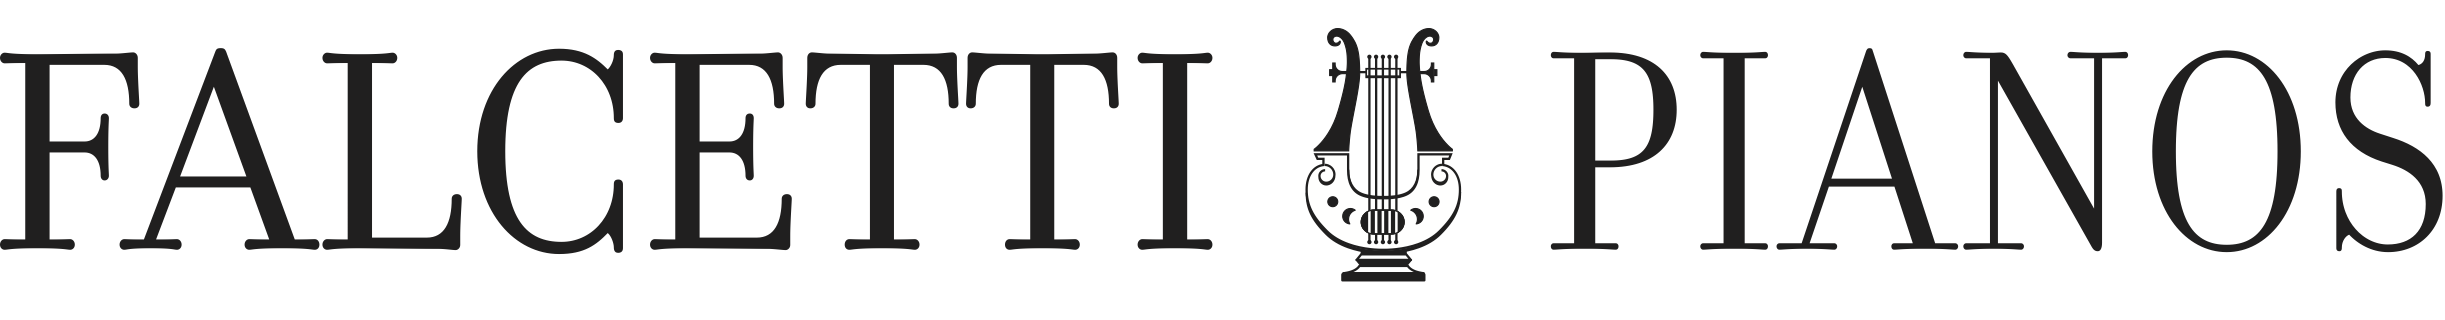 falcetti music logo